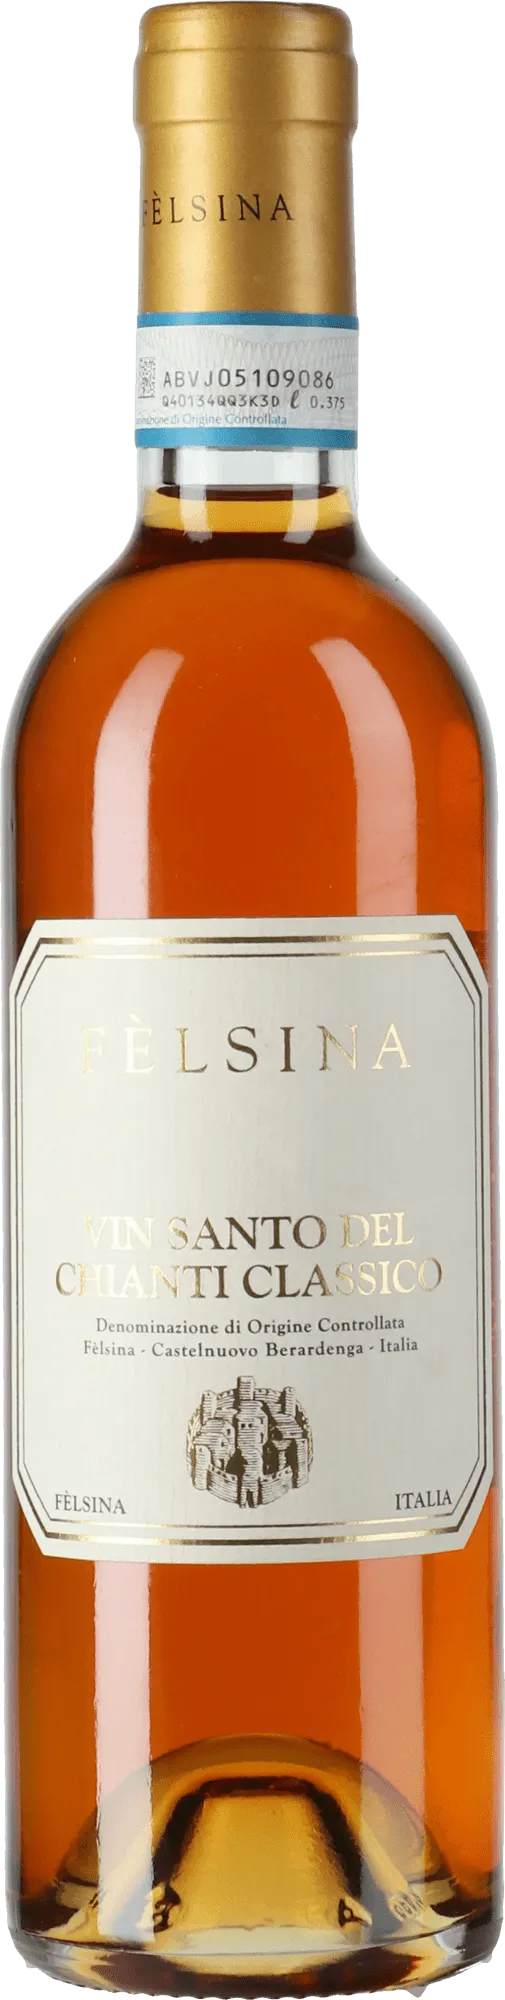 Bottle of Fèlsina Vin Santo del Chianti Classicowith label visible